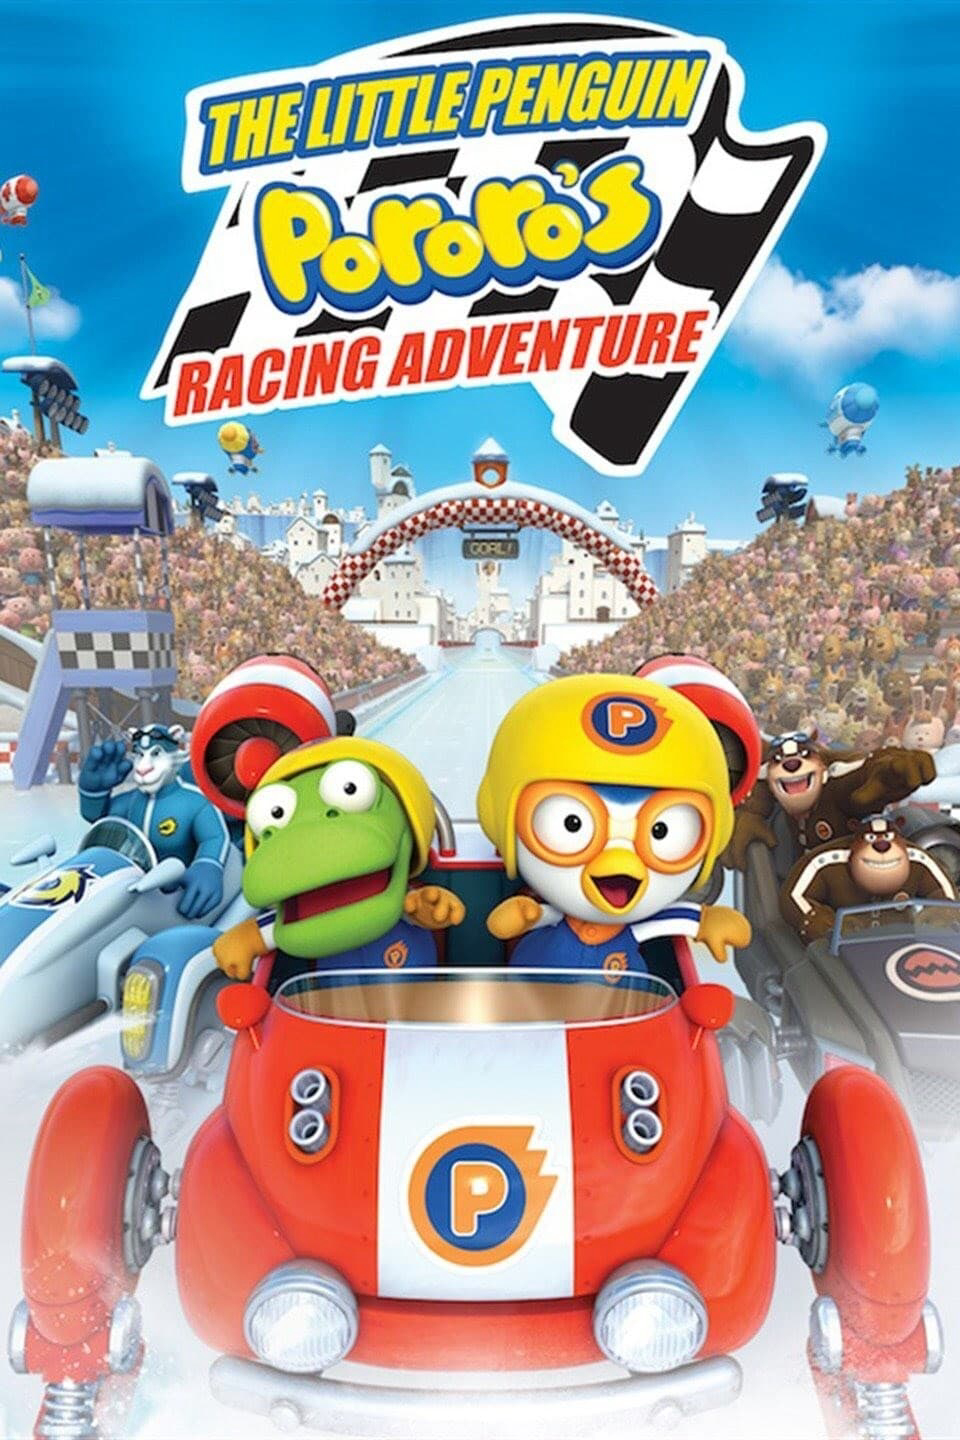 Poster Phim Pororo: Đường Đua Mạo Hiểm (The Little Penguin Pororo's Racing Adventure)